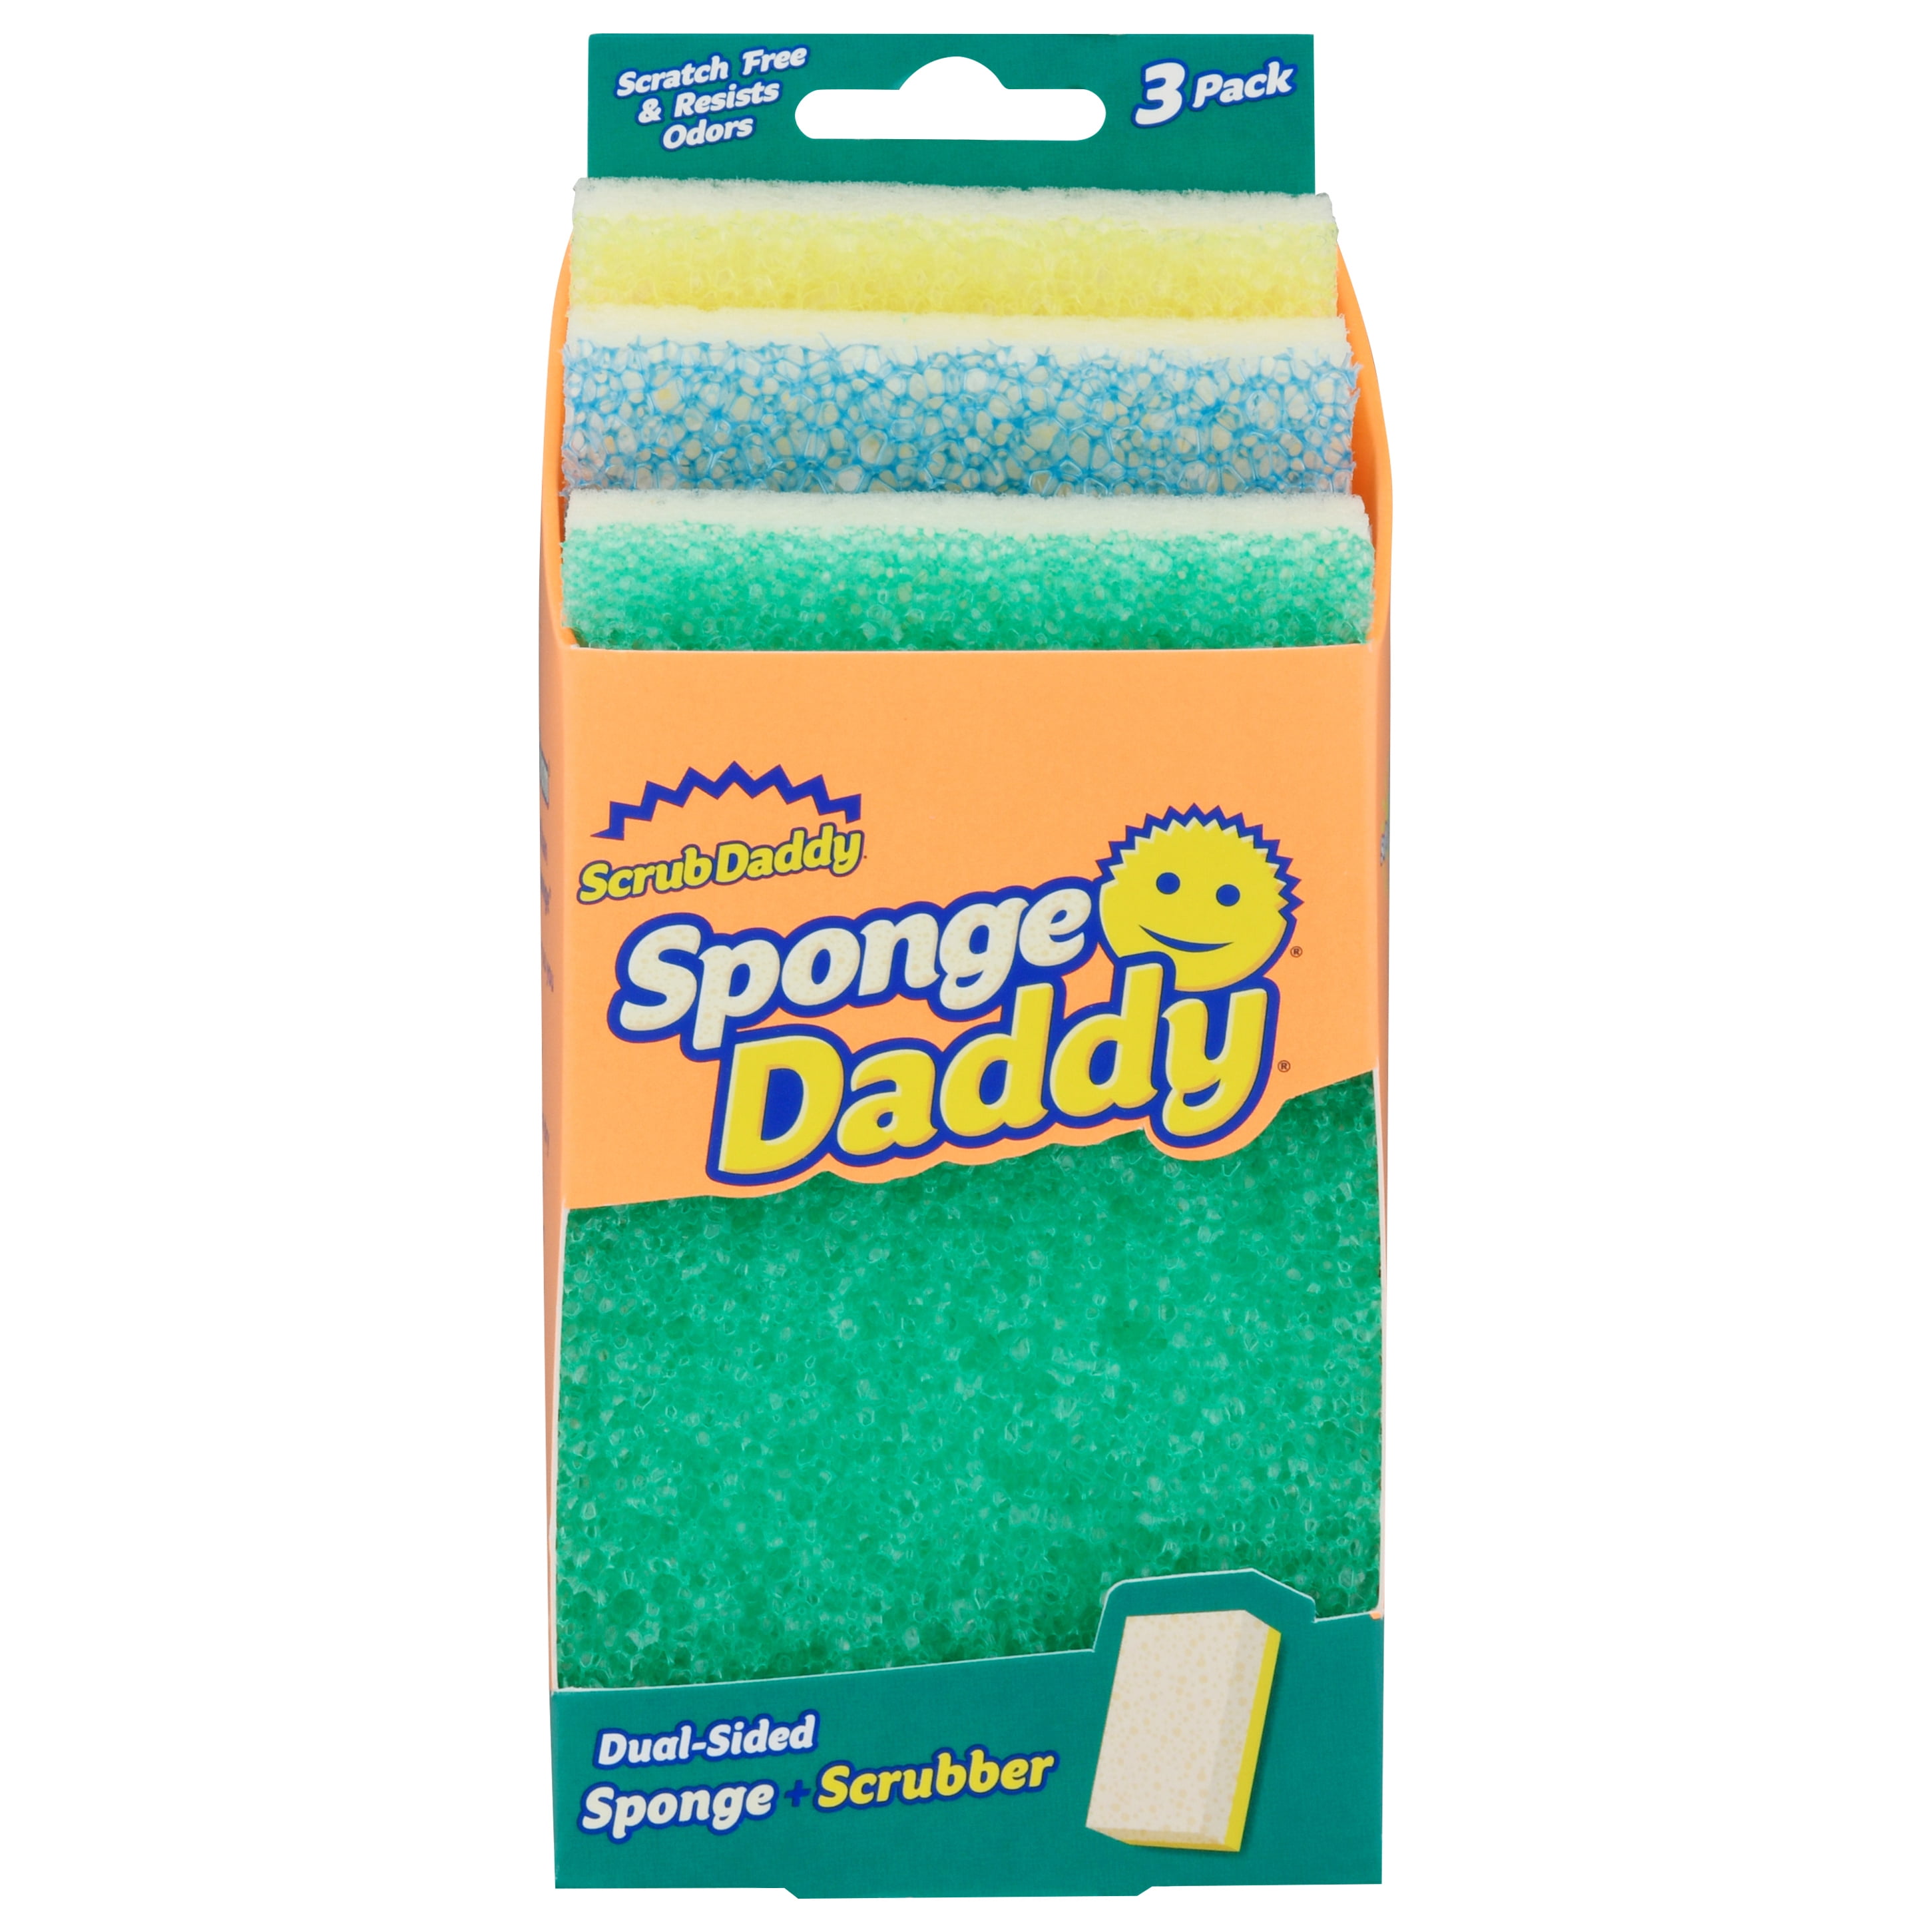 Scrub Daddy Scour Daddy Heavy Duty Scouring Sponge, 3 Pack 